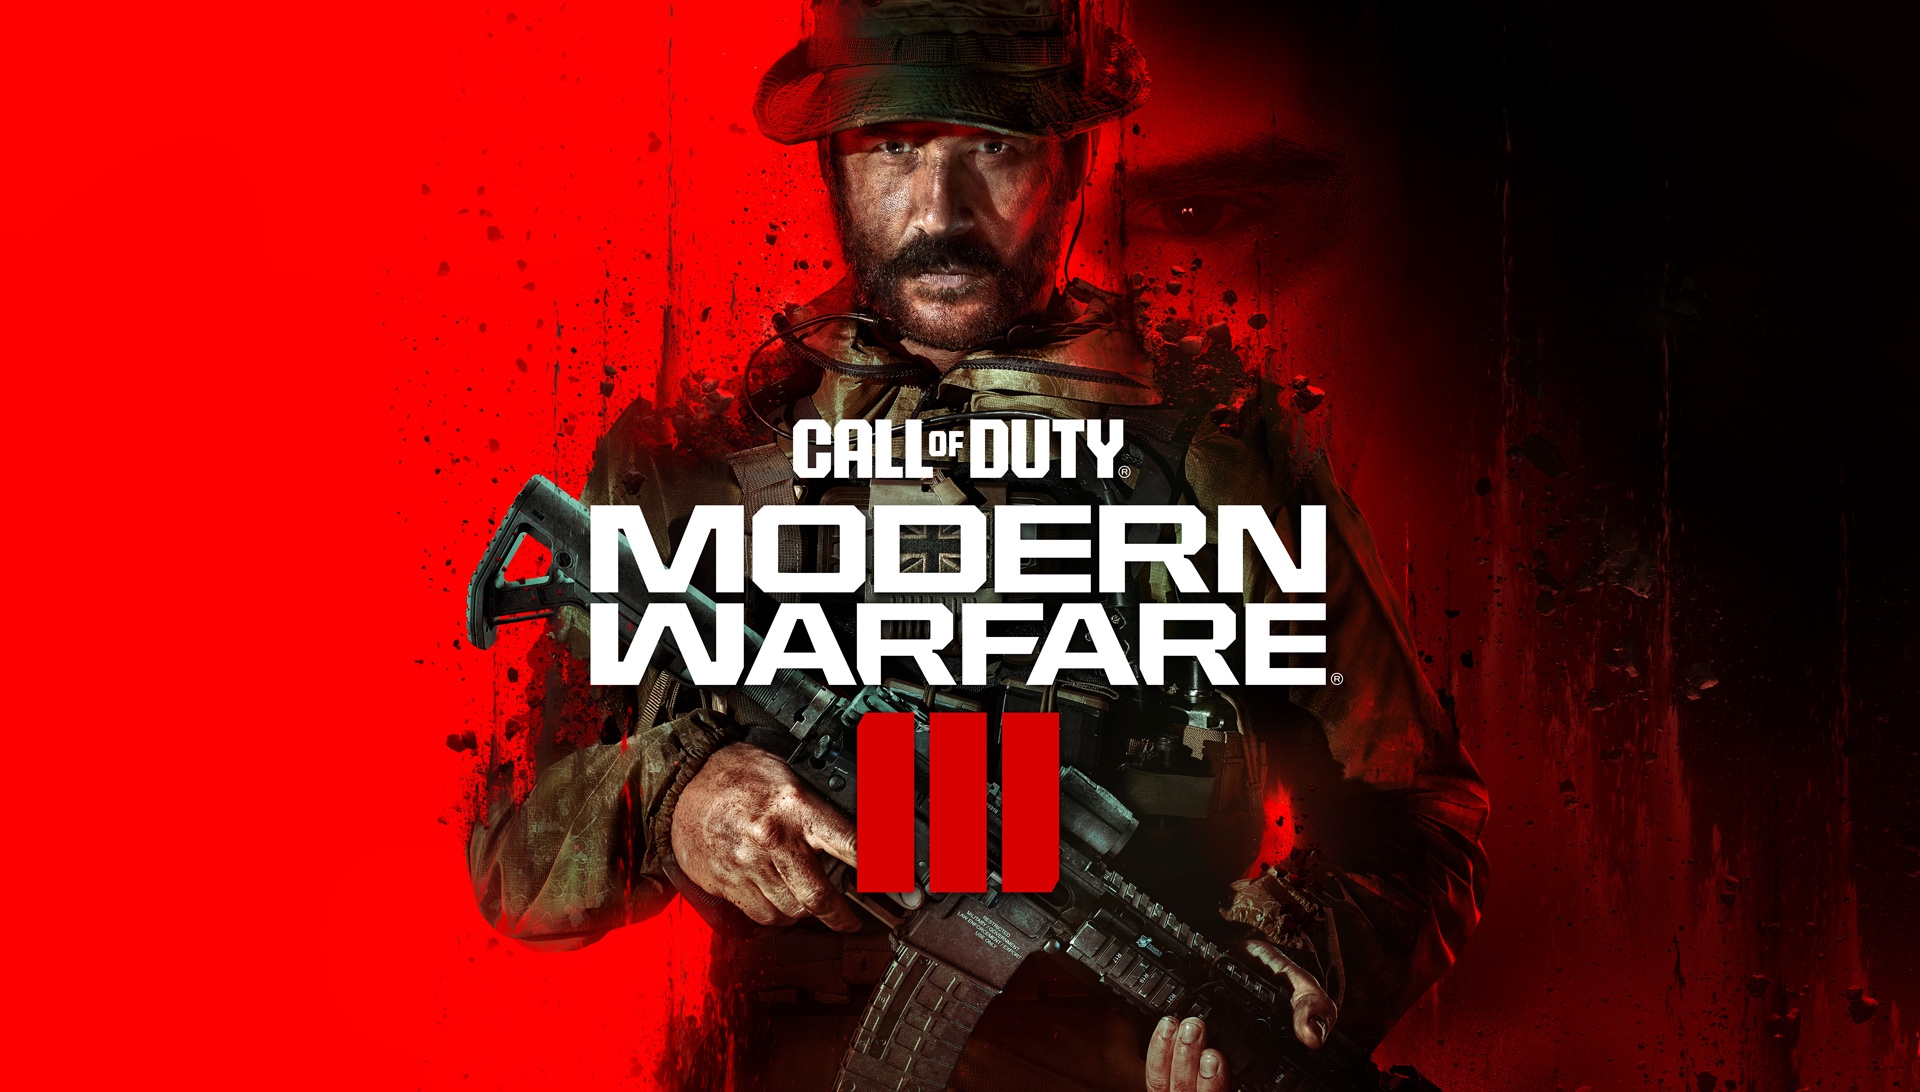 Presentación mundial: Anuncio de Call of Duty: Modern Warfare II